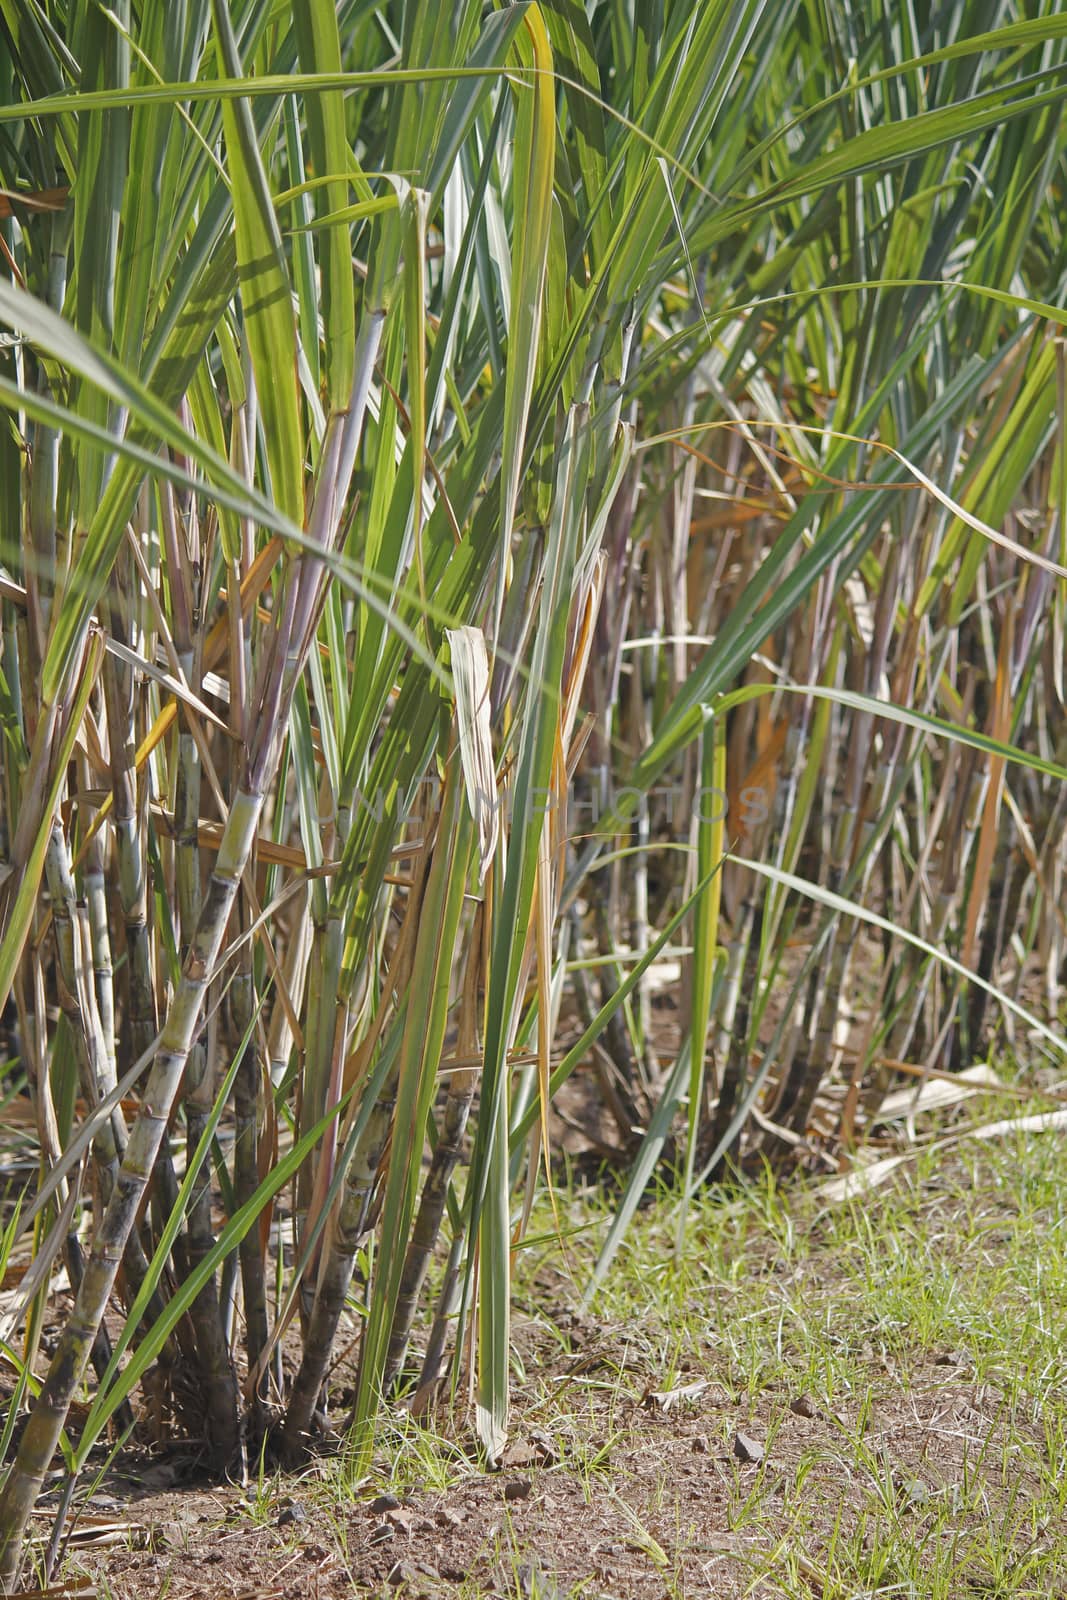 Field of Saccharum officinarum. Sugarcane  is any of several species of tall perennial true grasses of the genus Saccharum